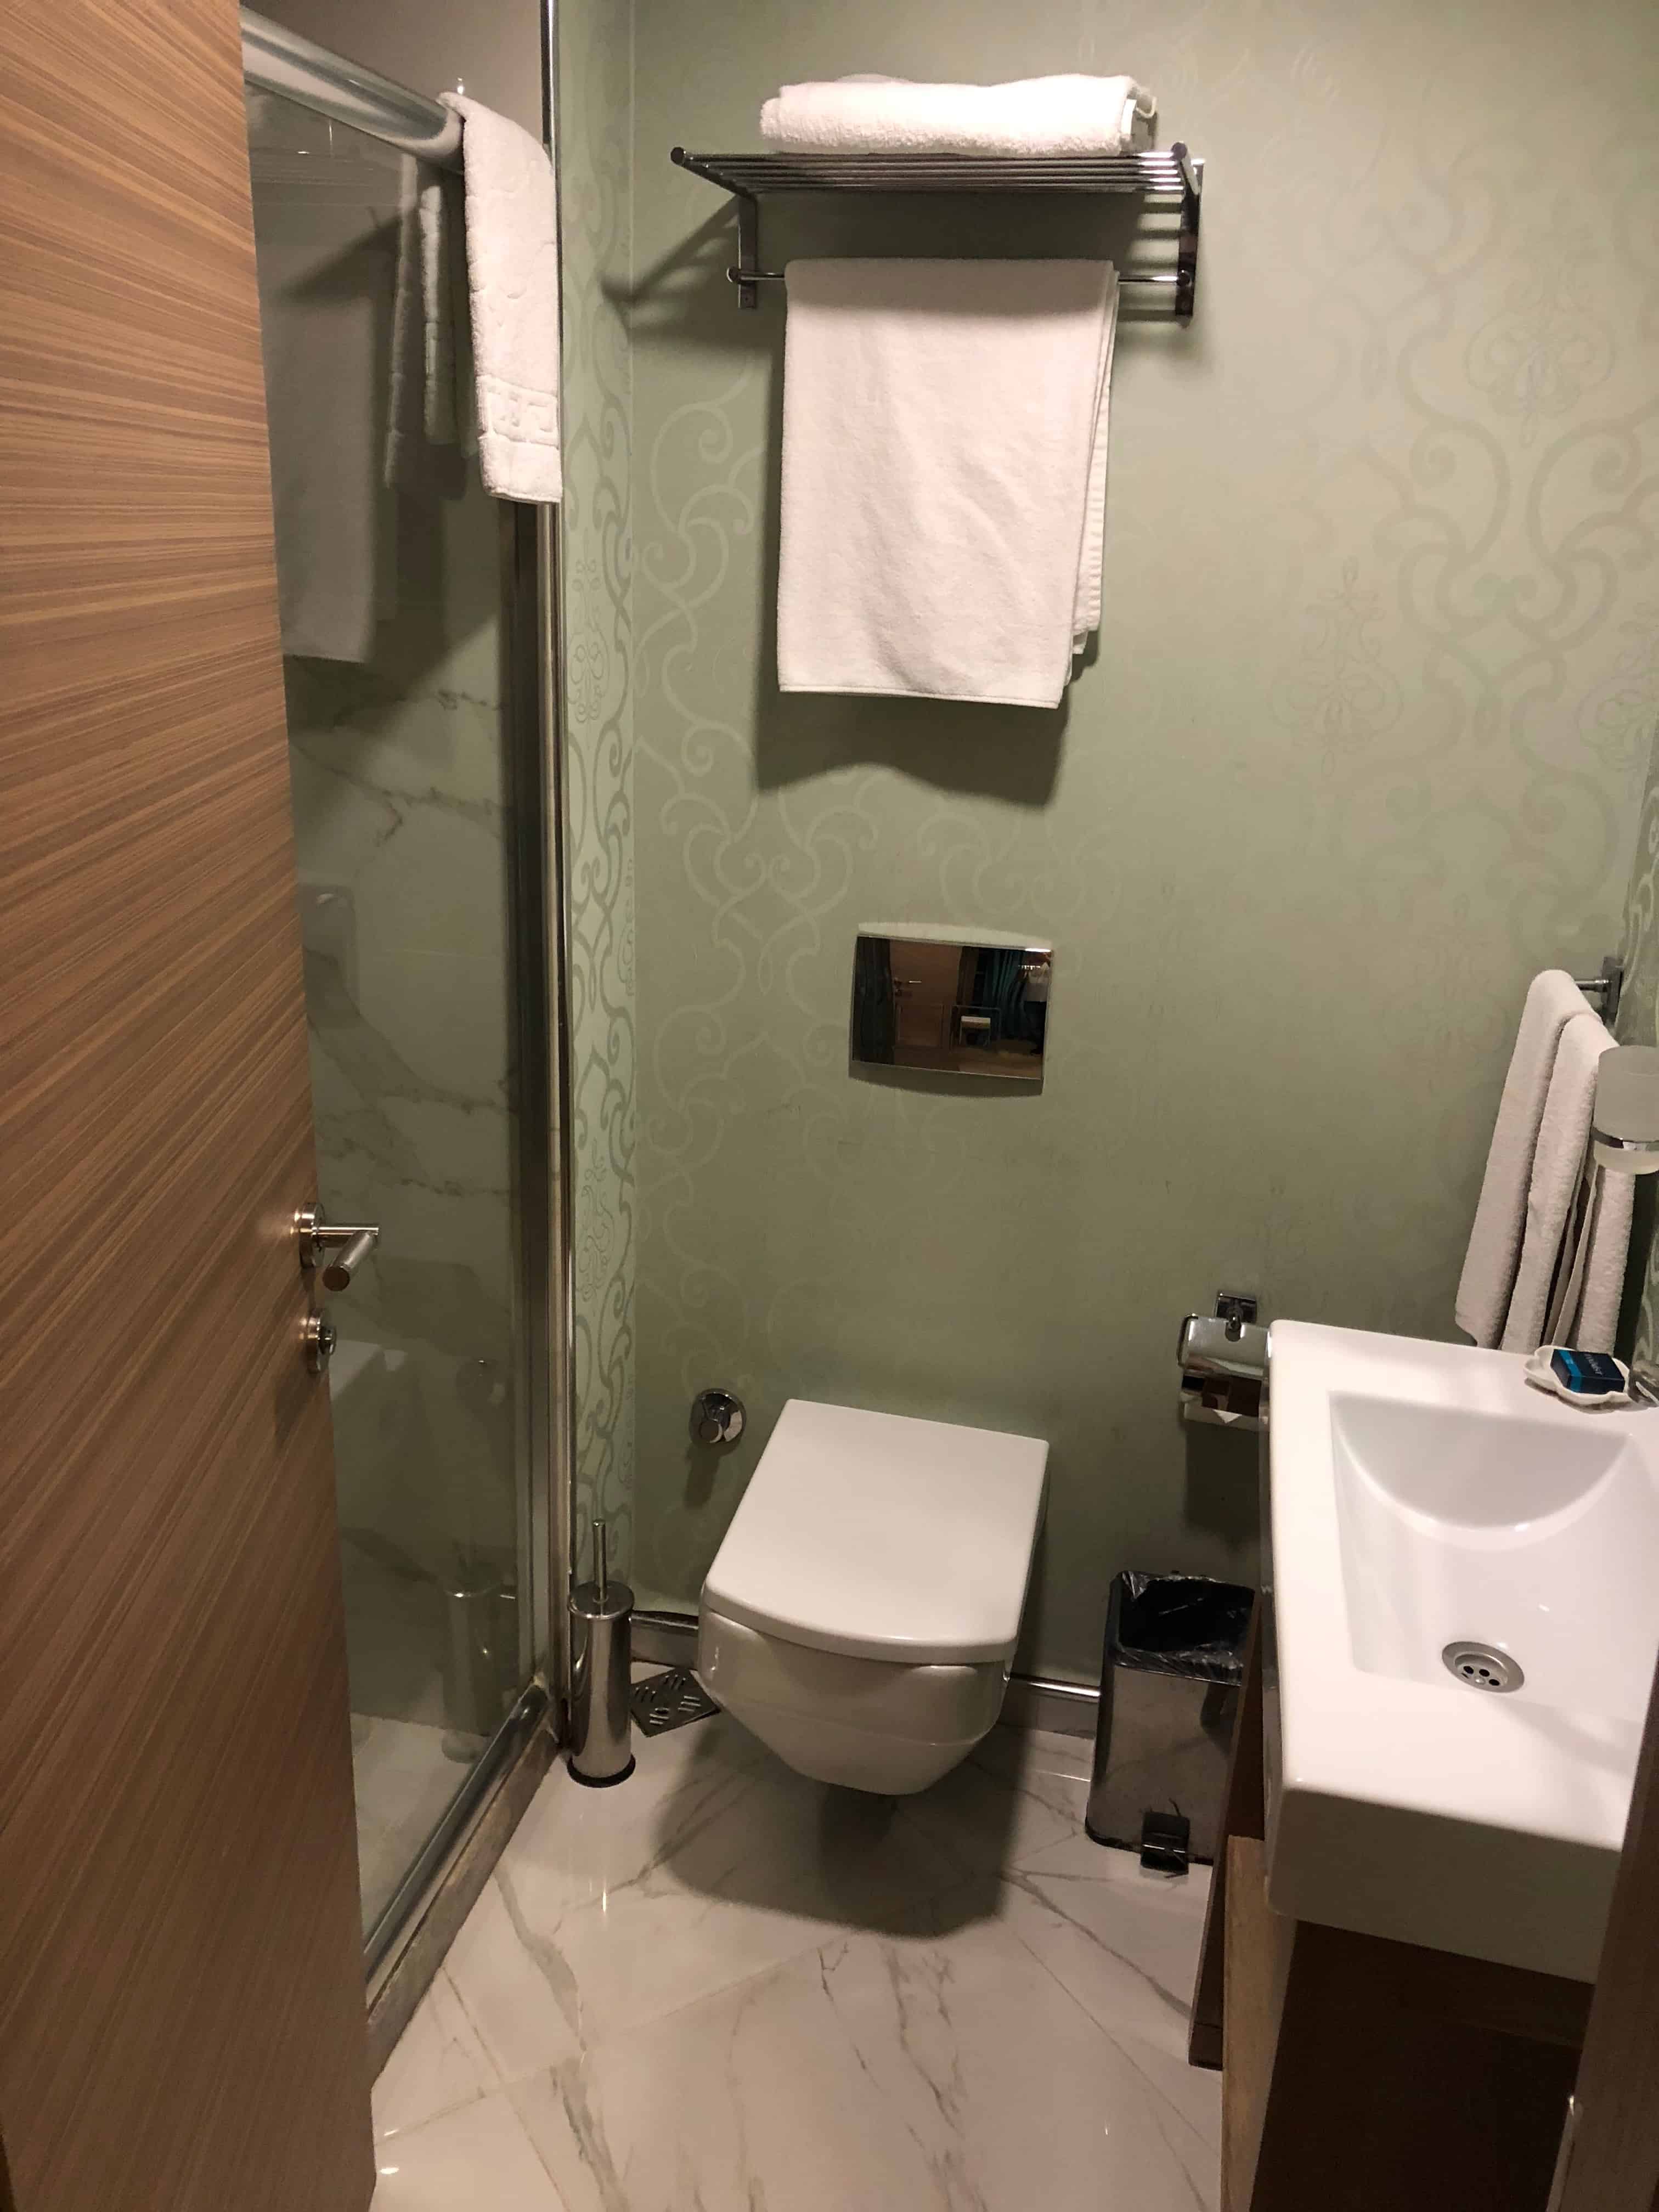 Bathroom at Taximist in Beyoğlu, Istanbul, Turkey